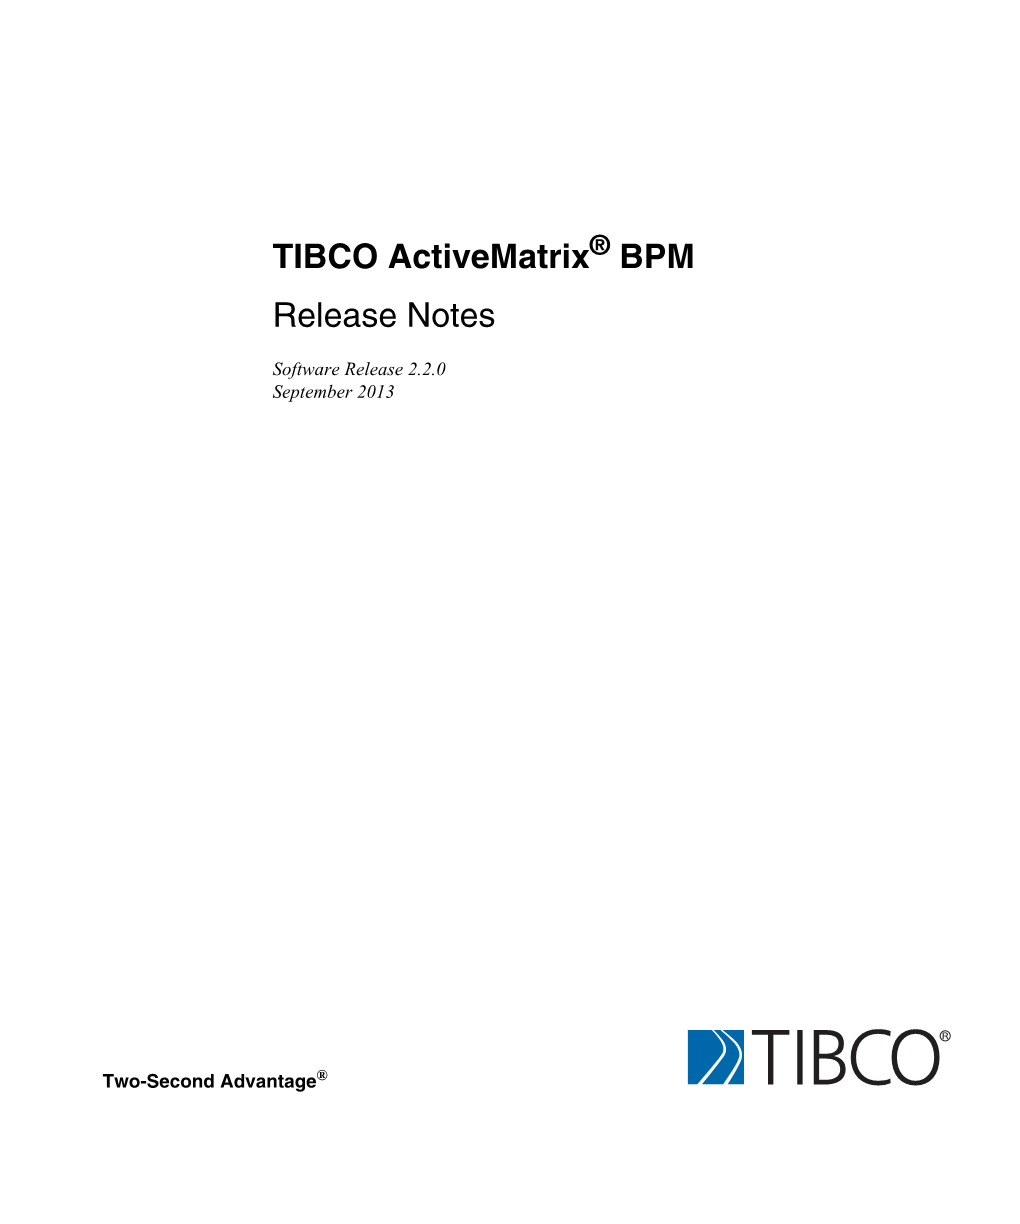 TIBCO Activematrix® BPM Release Notes